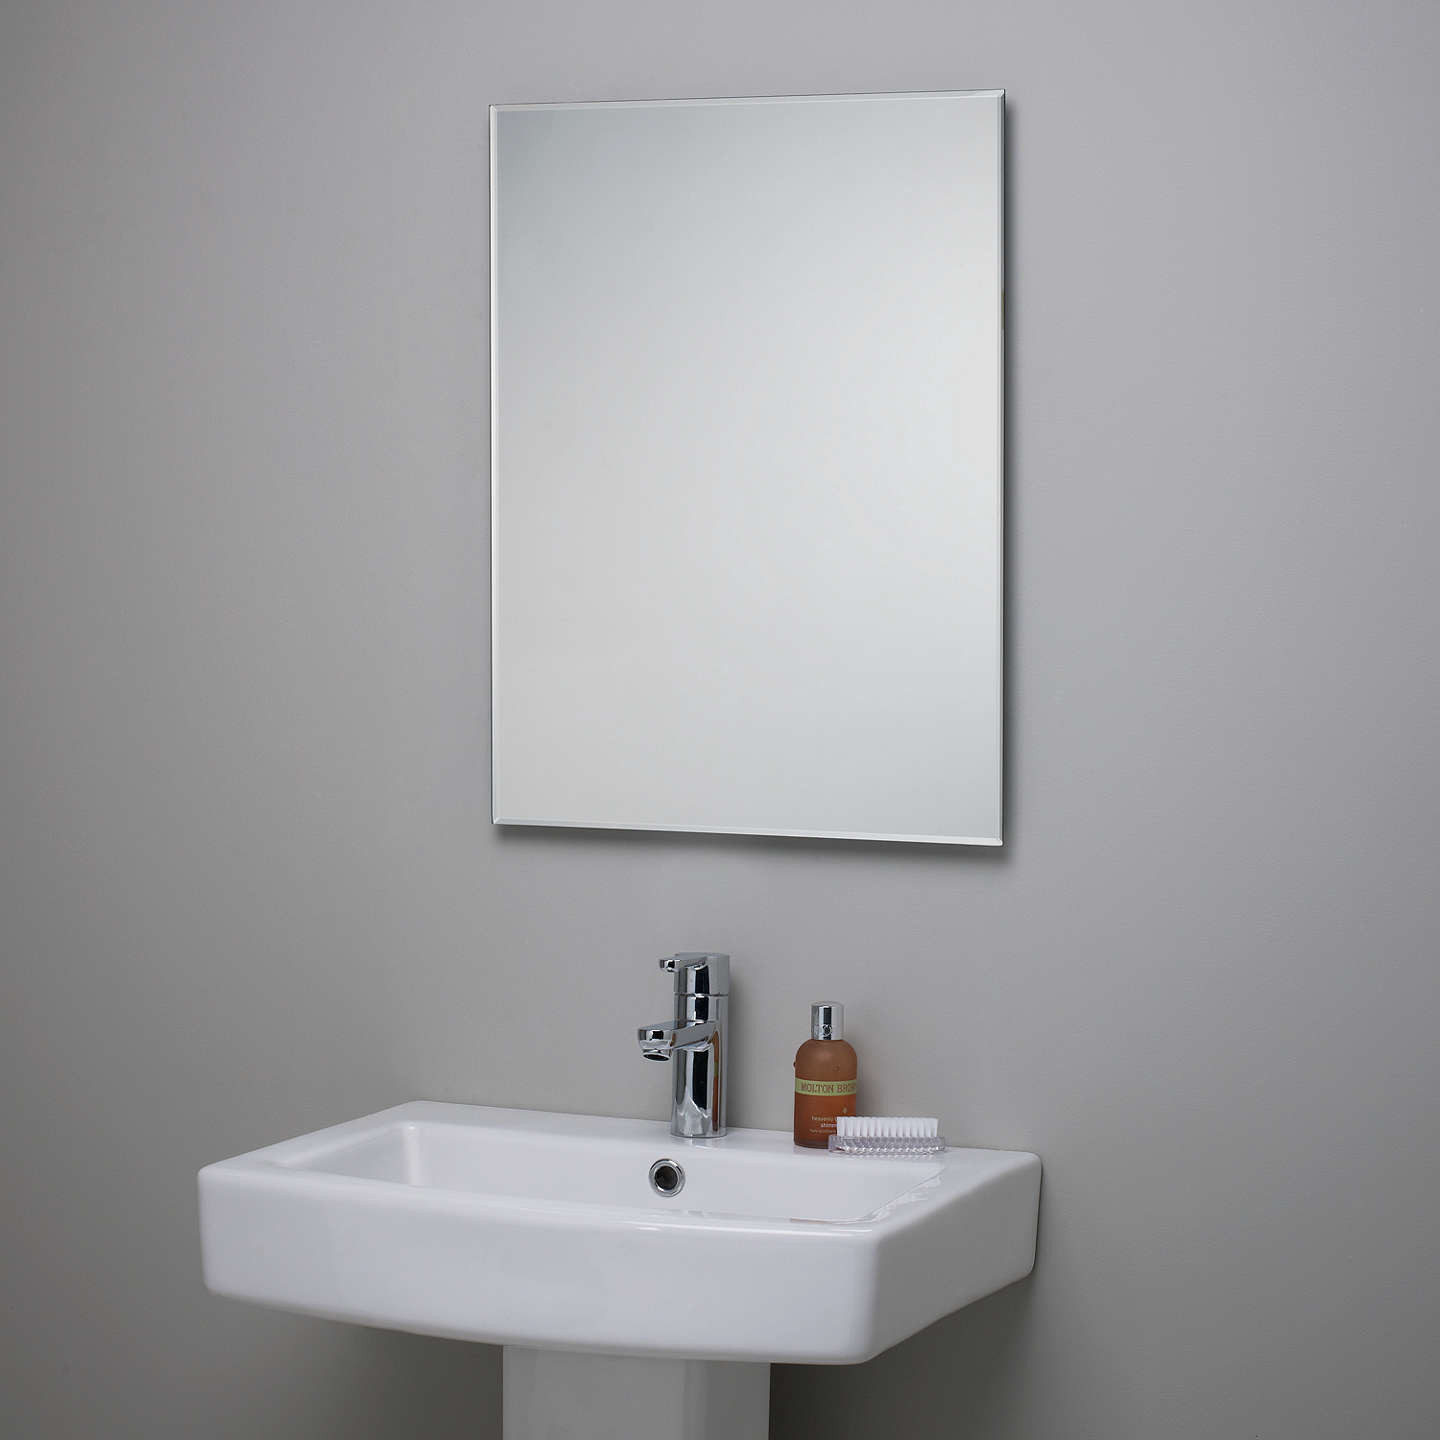 Bathroom Mirrors Online
 John Lewis Bevelled Edge Bathroom Mirror at John Lewis